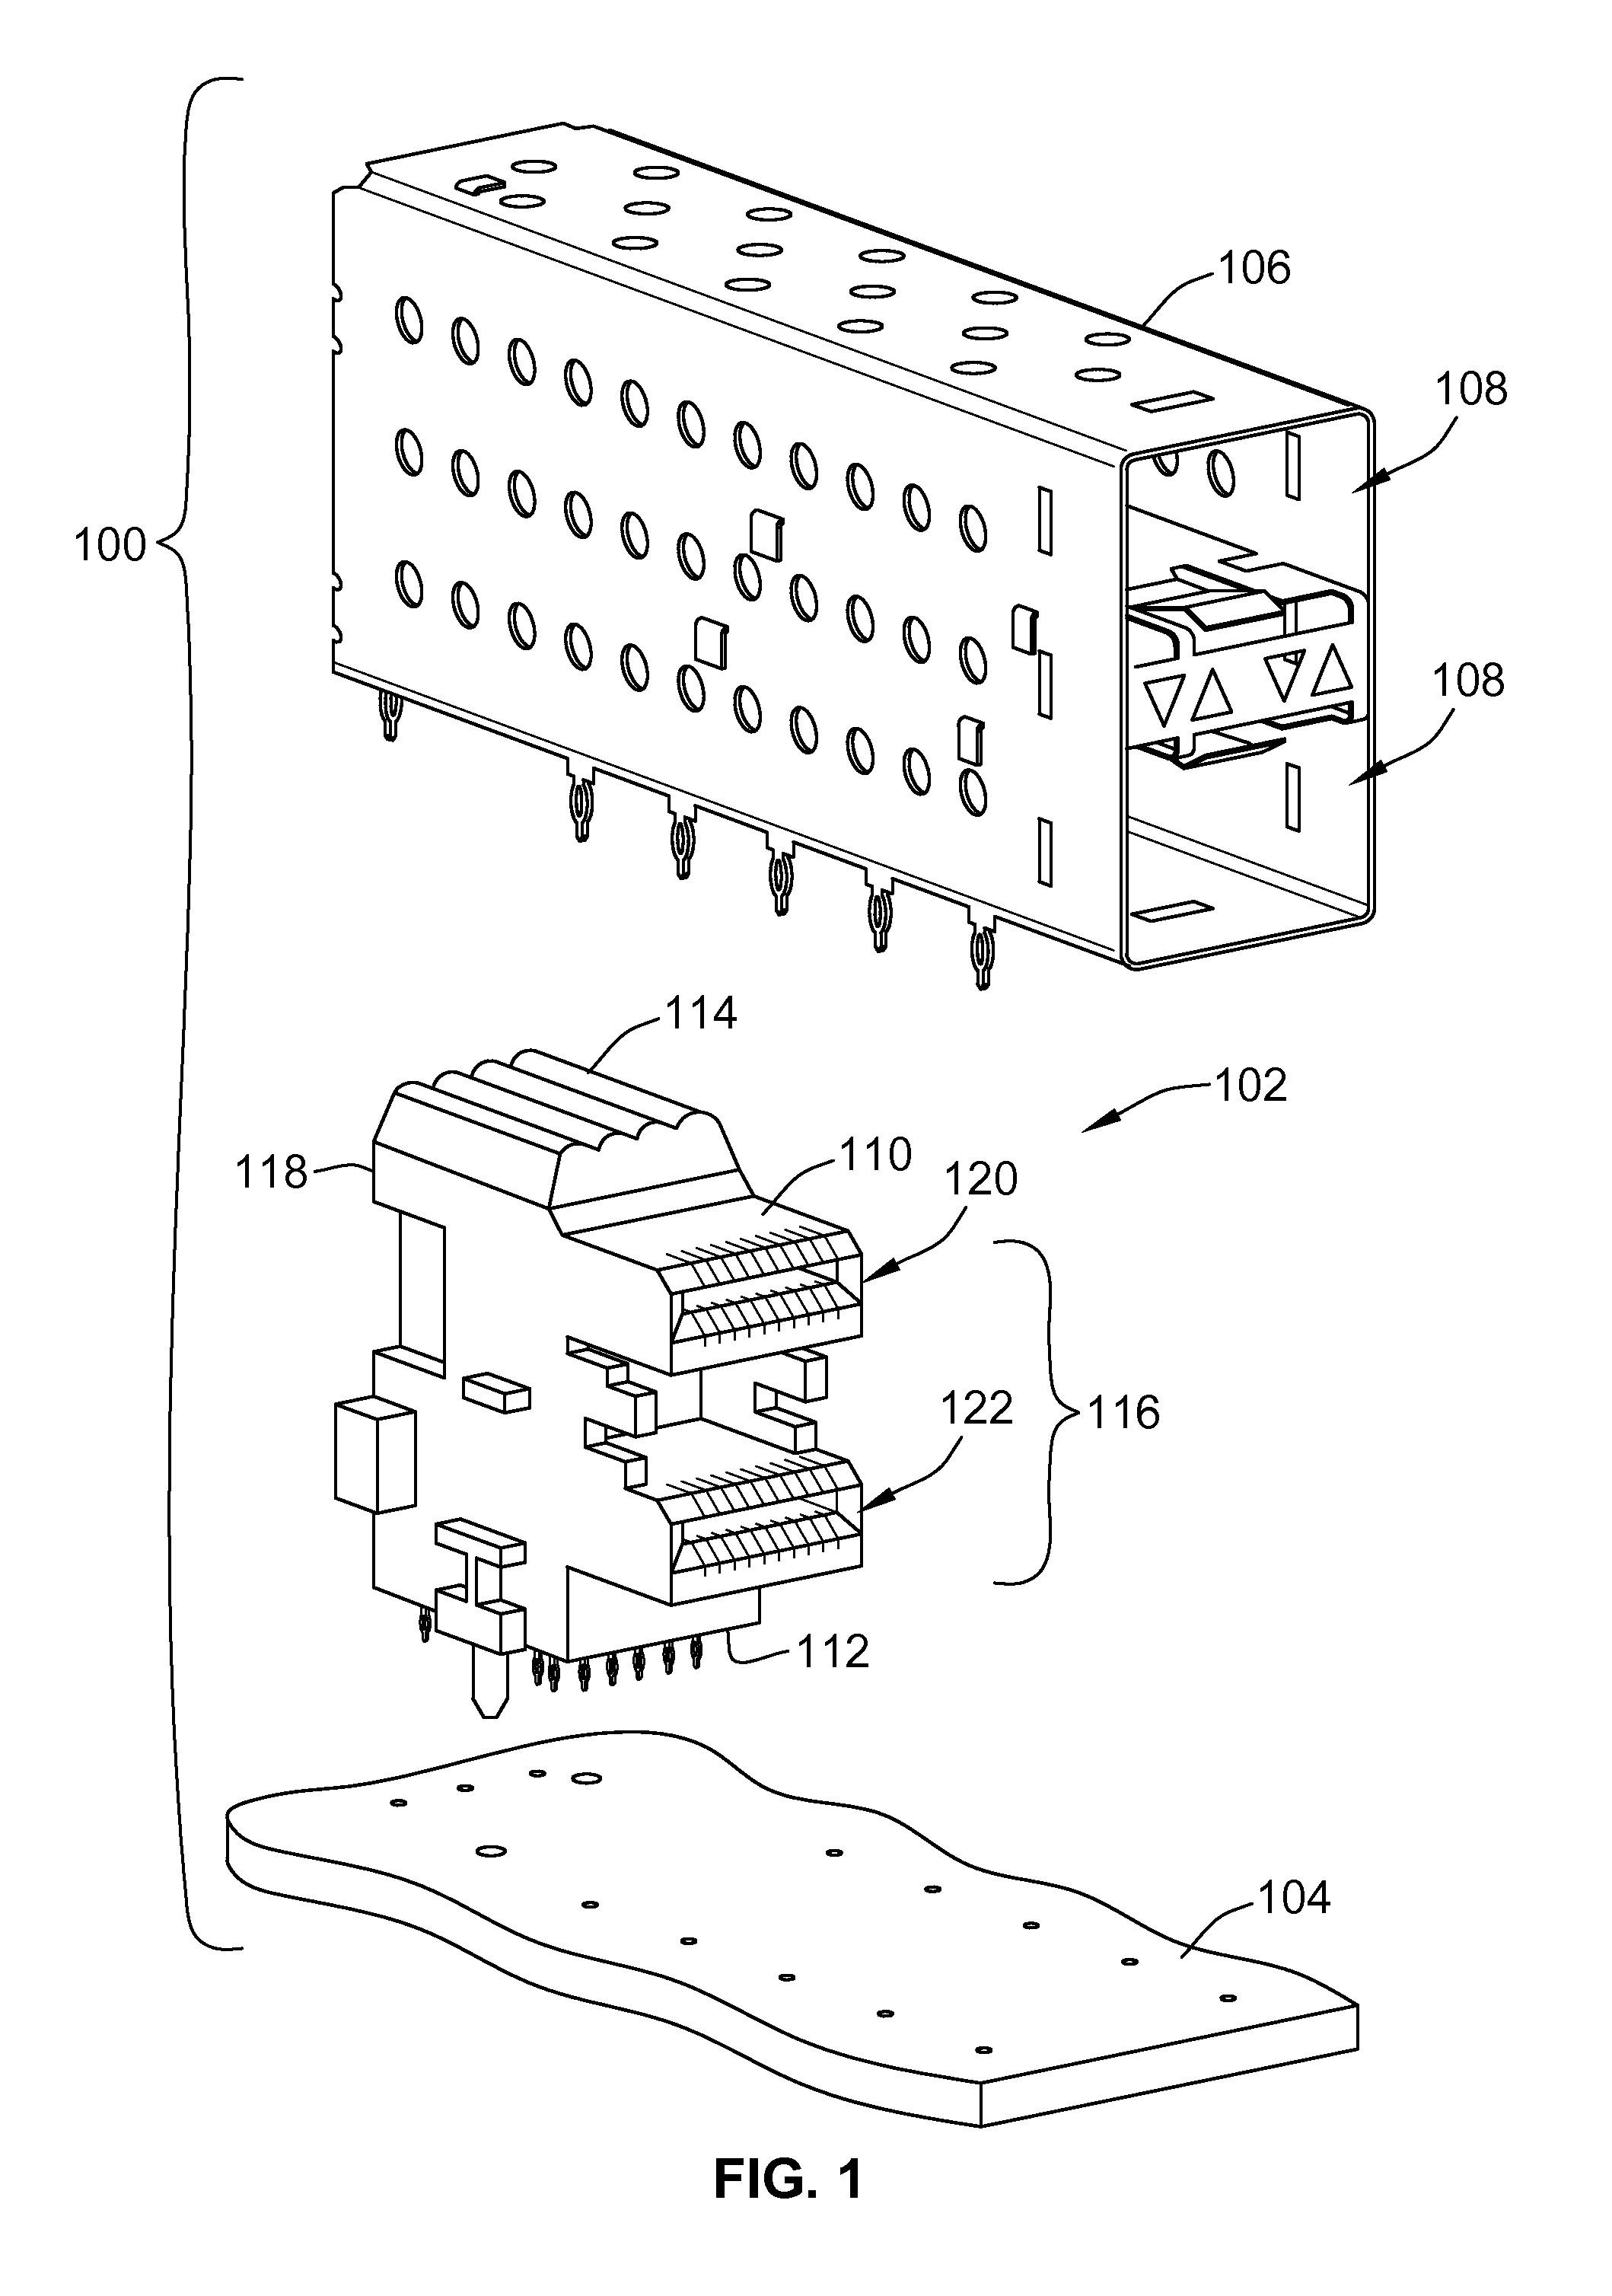 Modular connector system